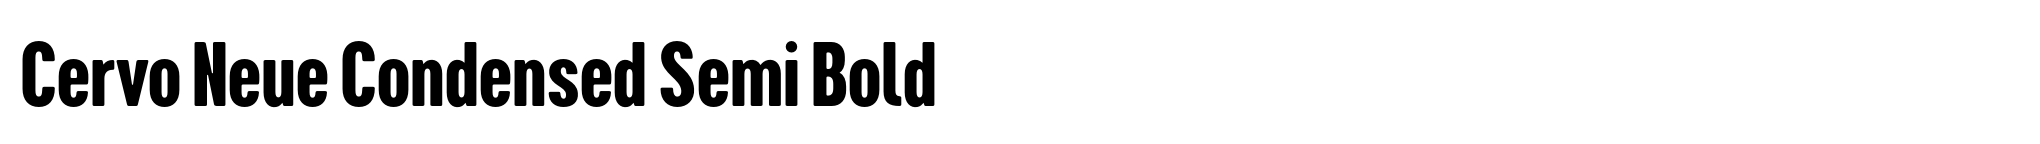 Cervo Neue Condensed Semi Bold image